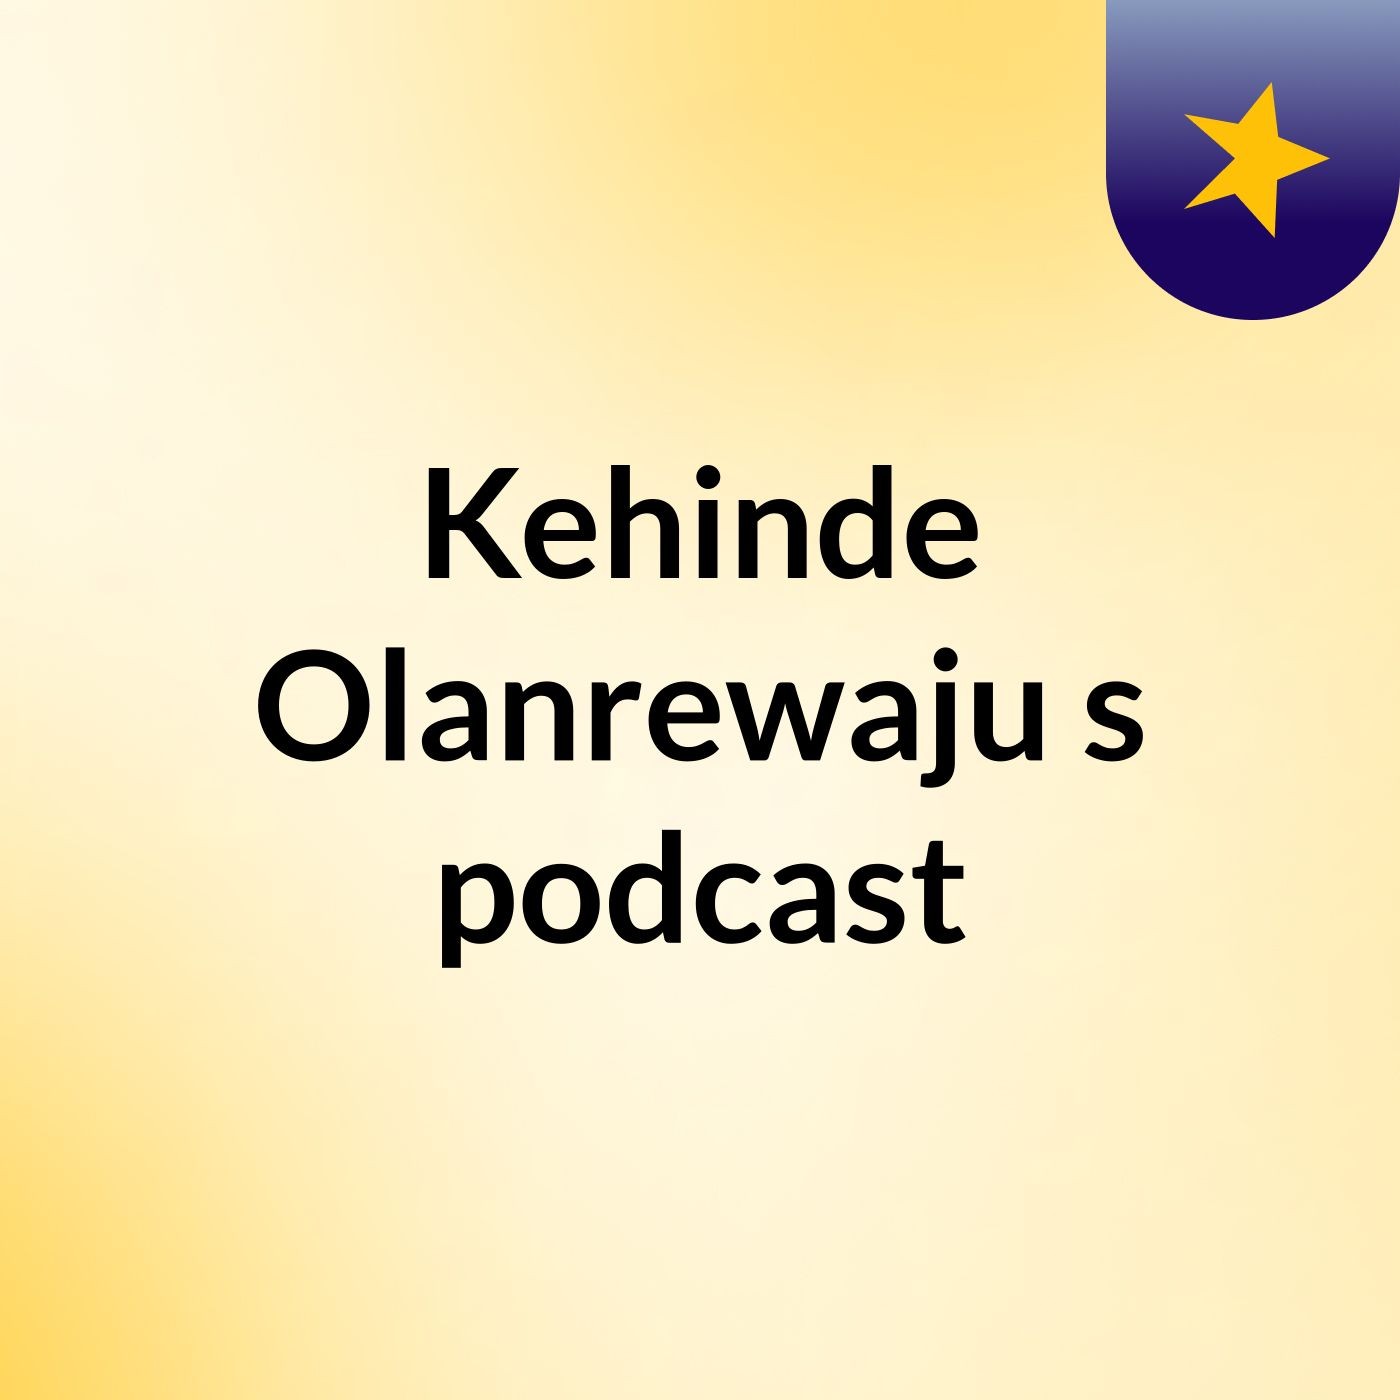 Kehinde Olanrewaju's podcast